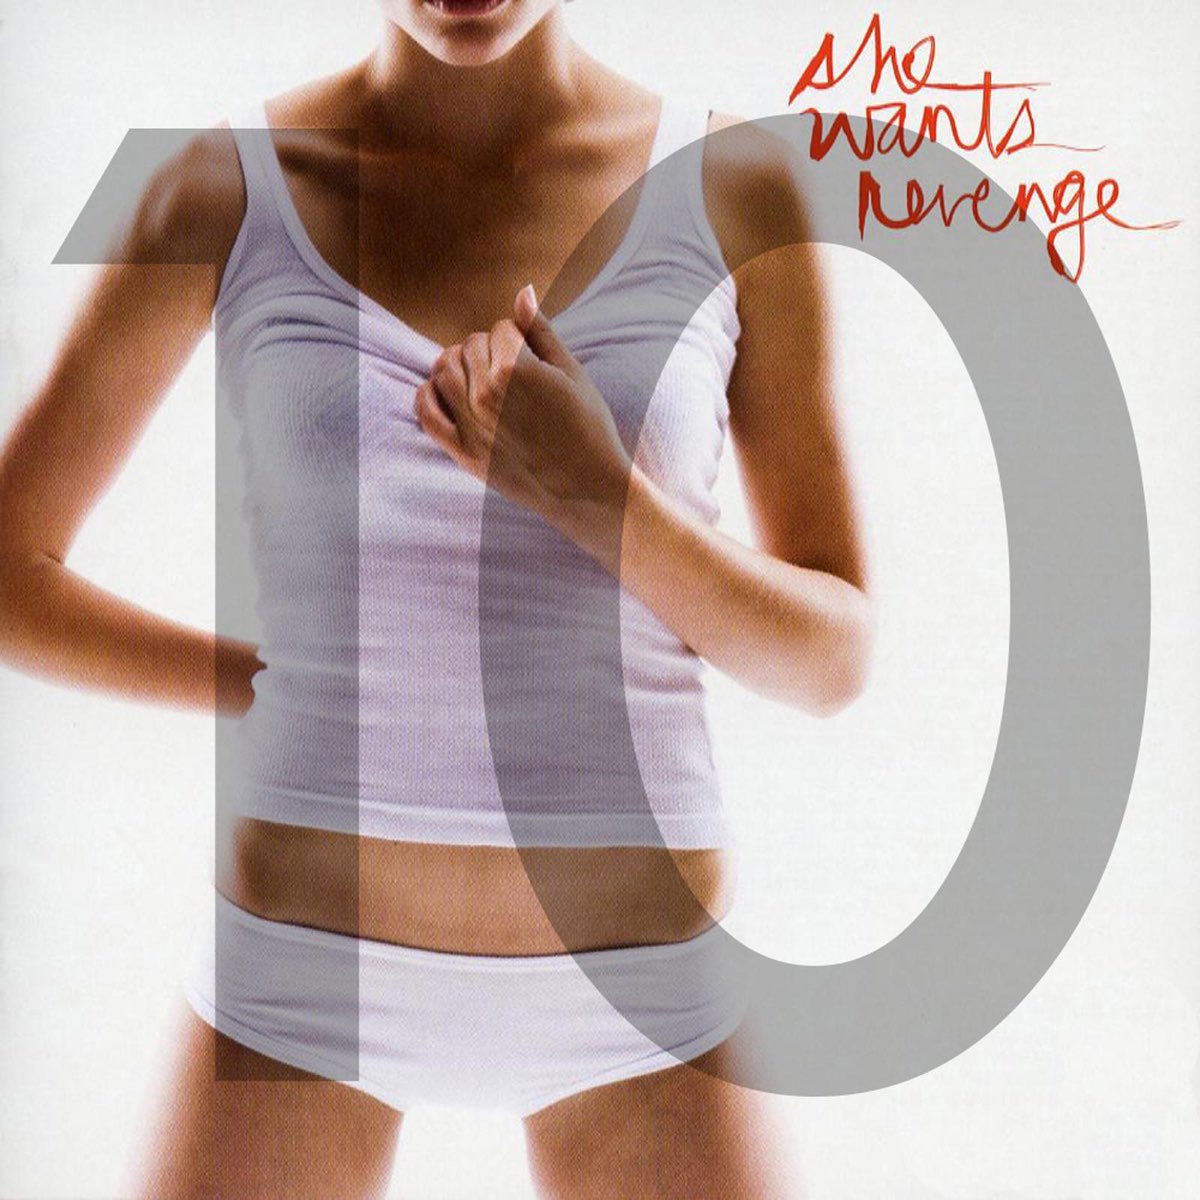 She wants revenge tear you. She wants Revenge album. She wants обложка. She wants Revenge album Cover. She wants Revenge she wants Revenge.